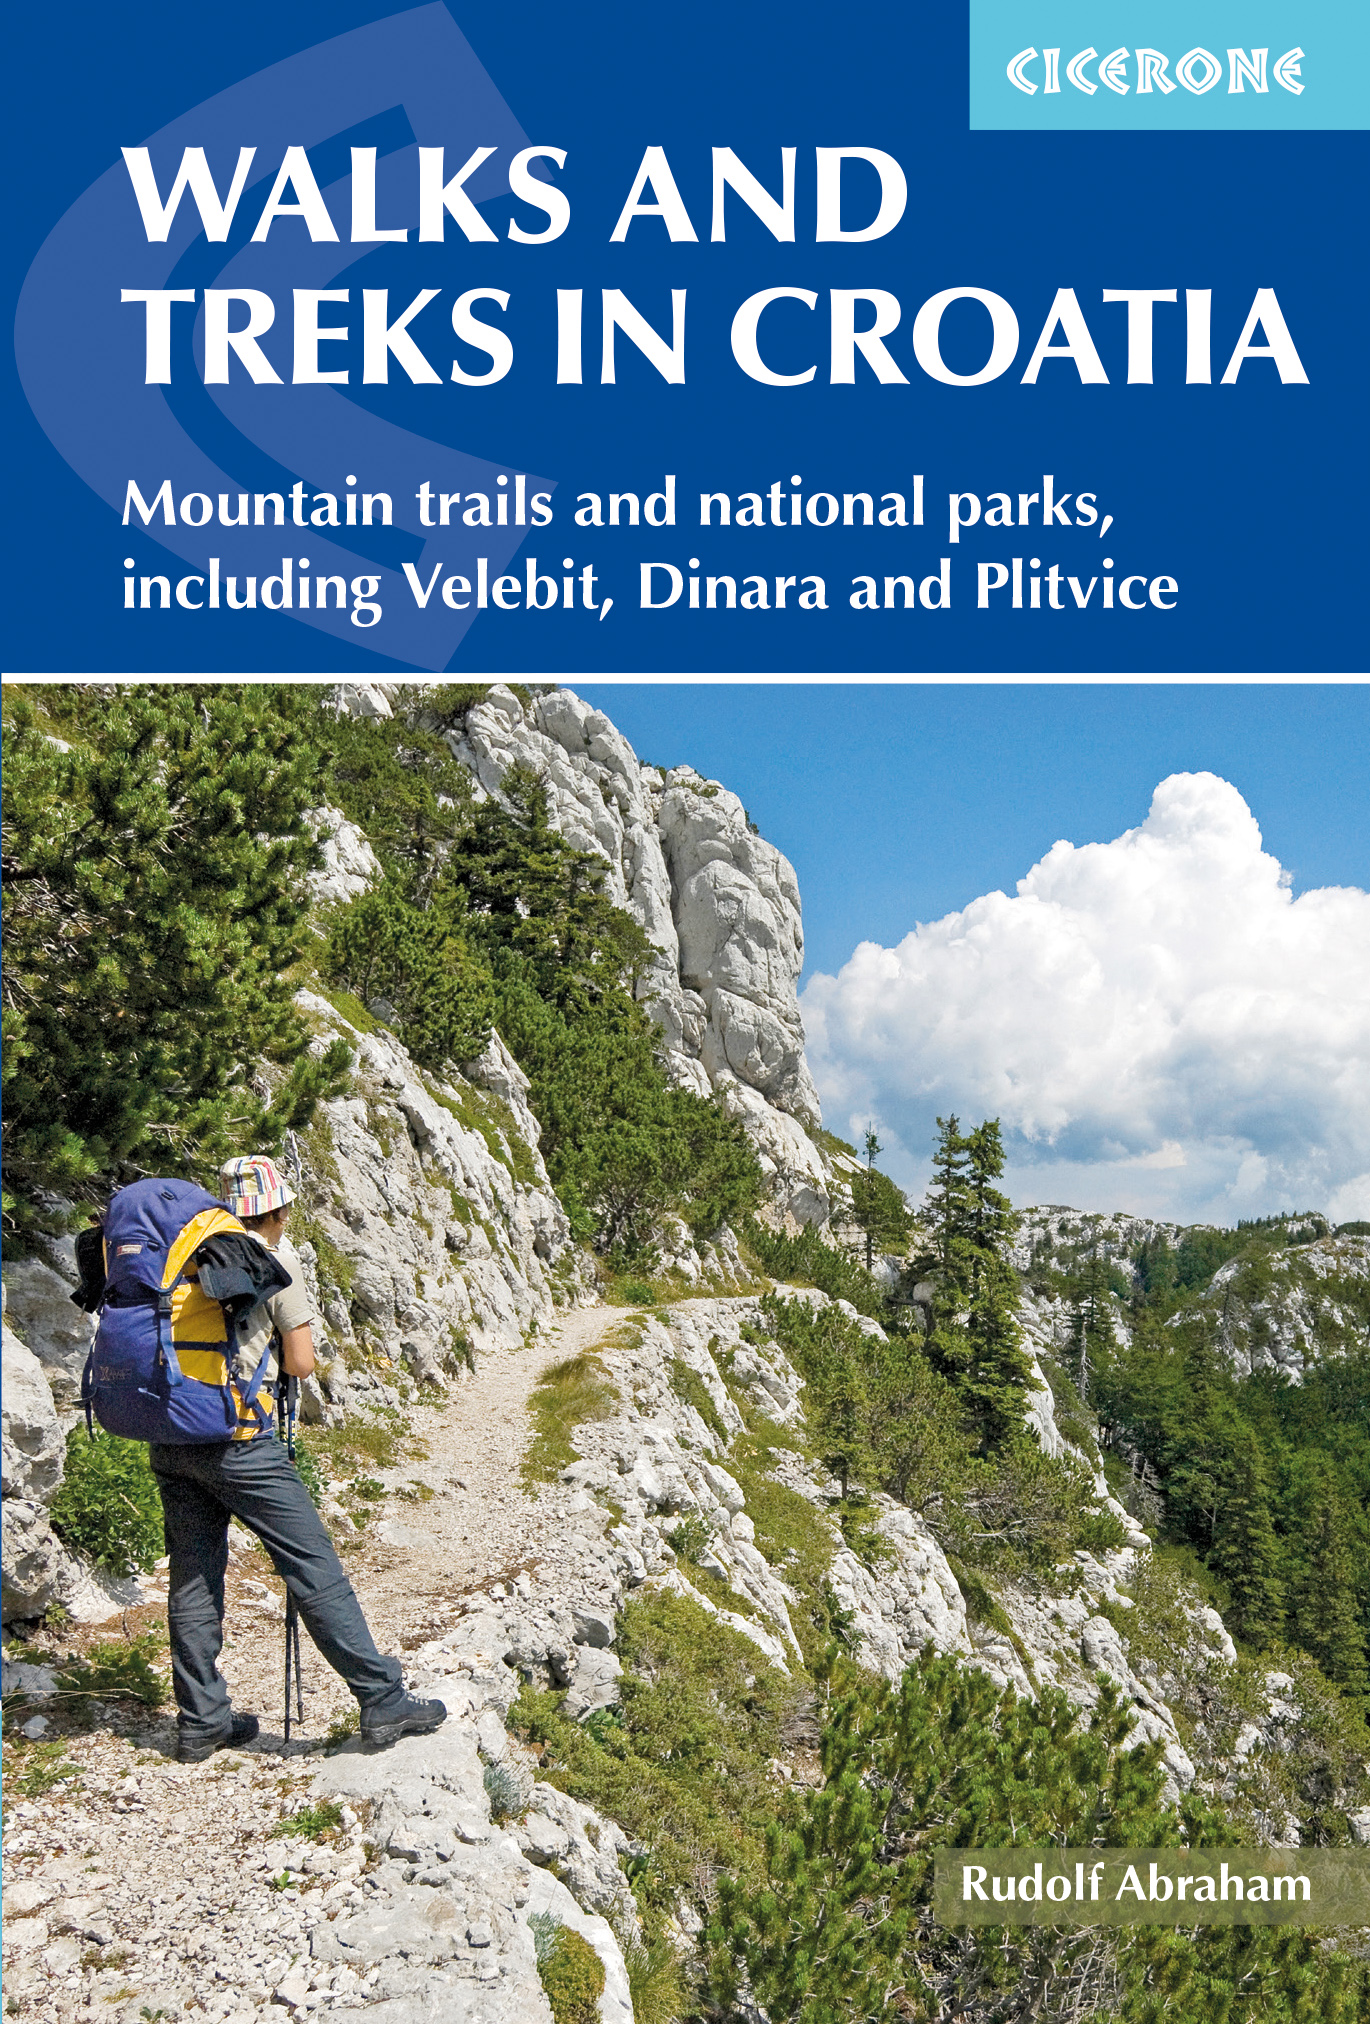 Cicerone Croatia (Chorvatsko) walks and treks 3. edice anglicky